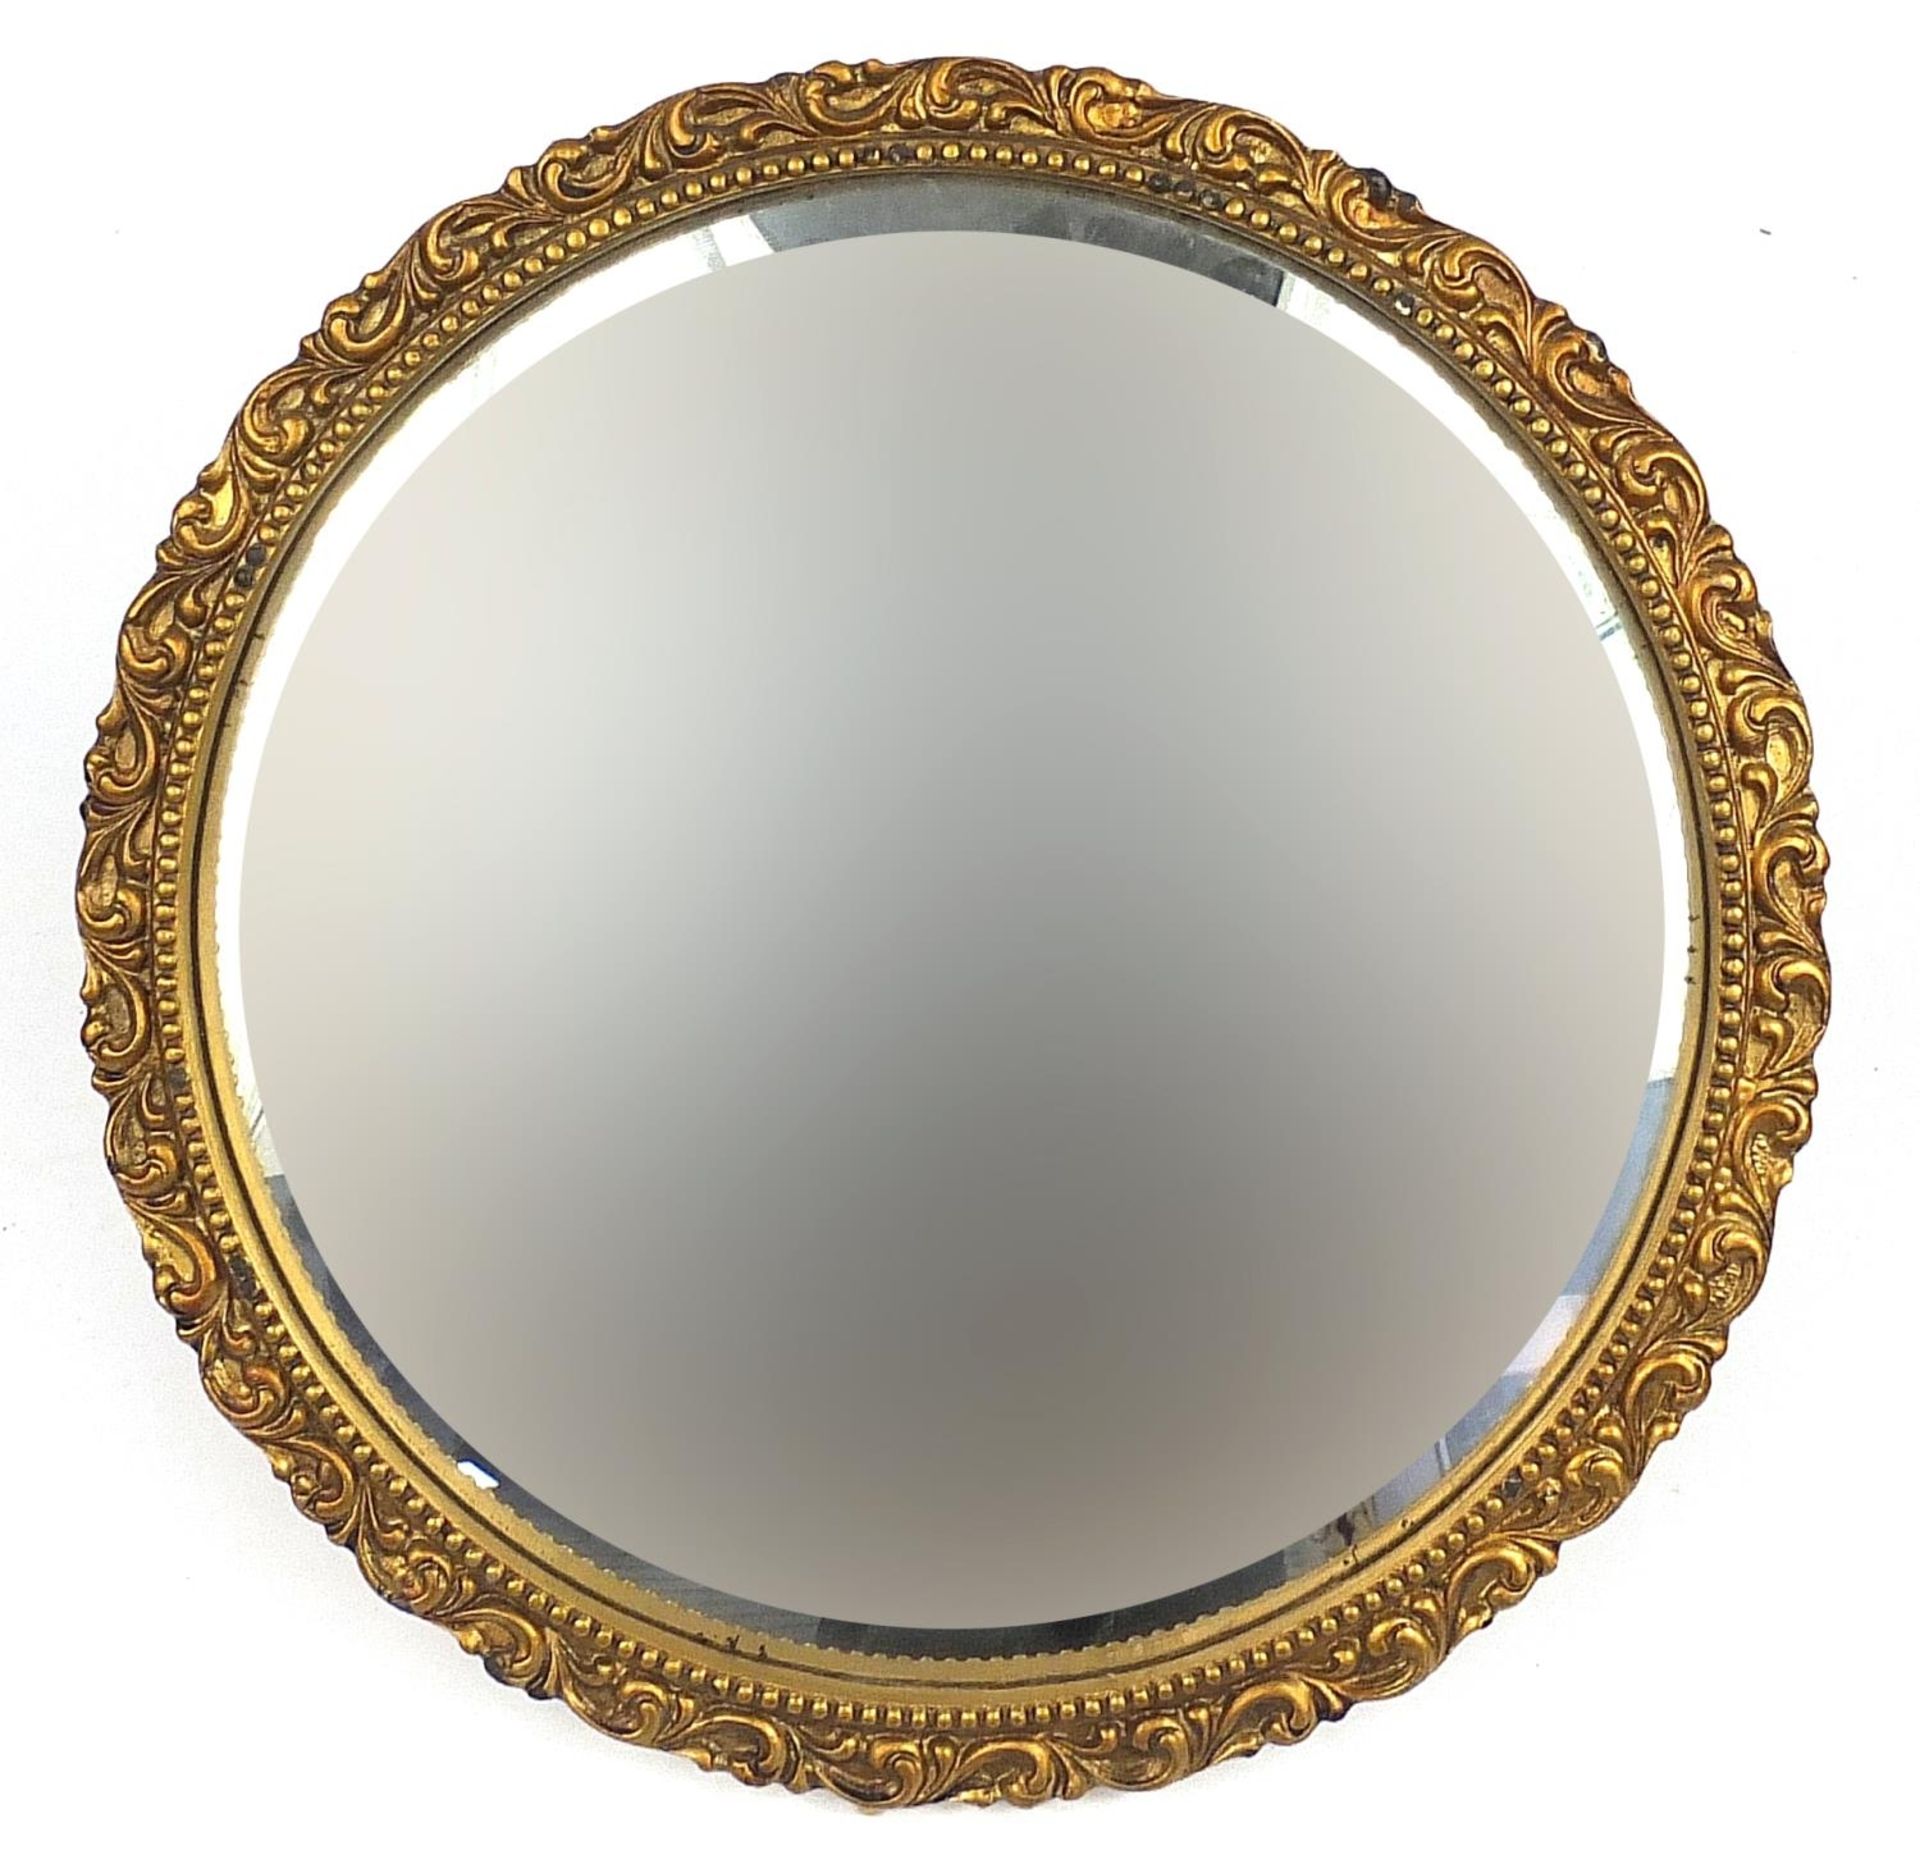 Circular gilt framed convex mirror, 40cm in diameter